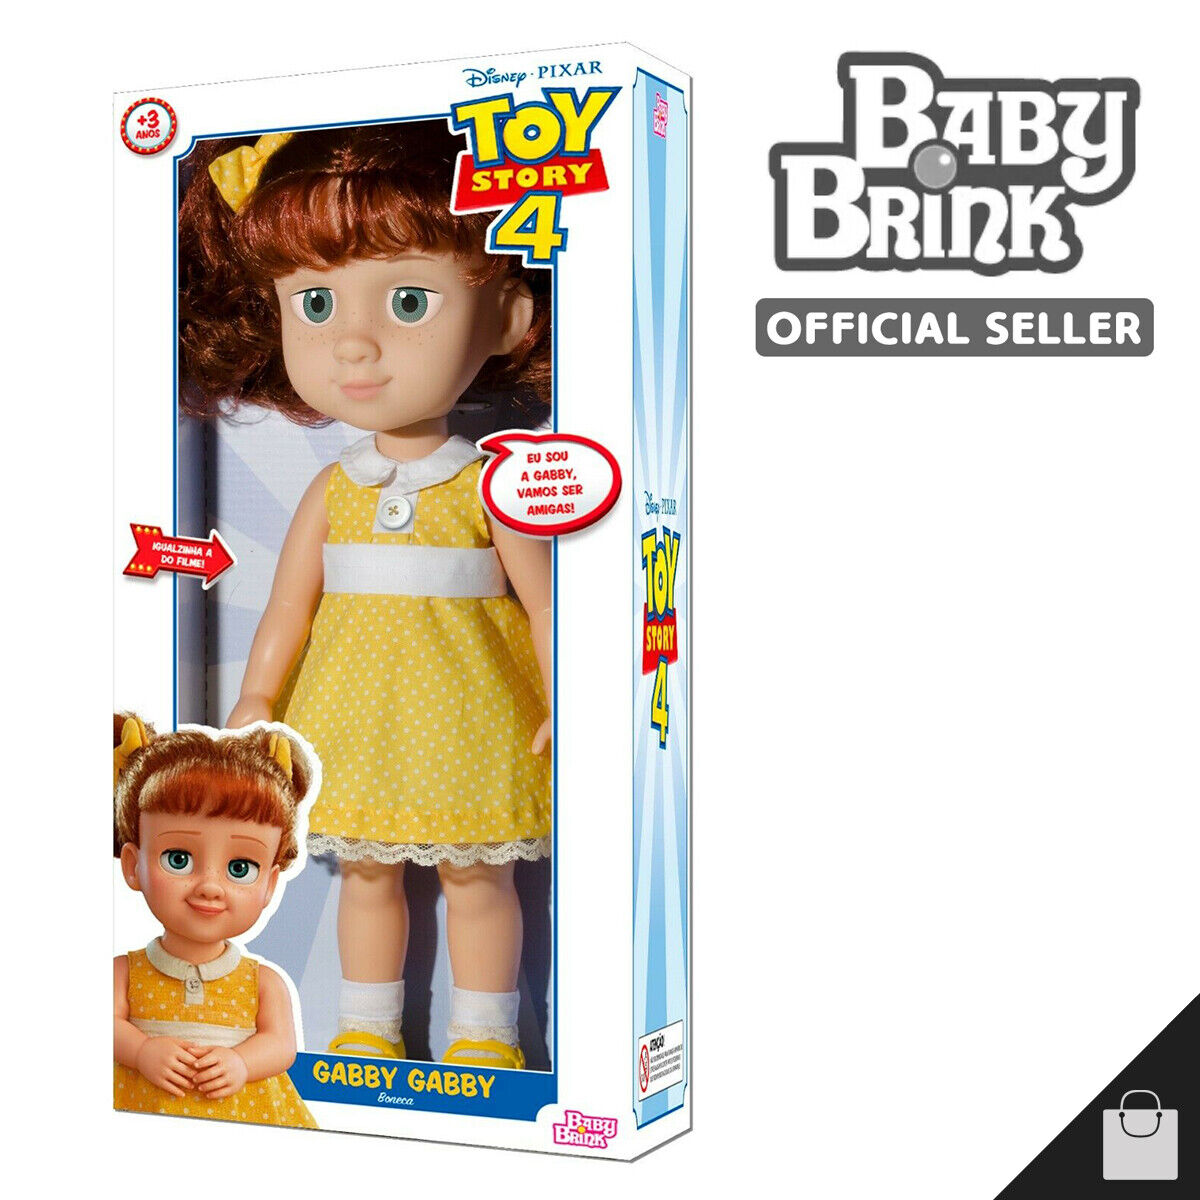 Gabby Gabby Doll Life Size Toy Story 4 Disney Pixar 17” MOC MIB Figure in Box